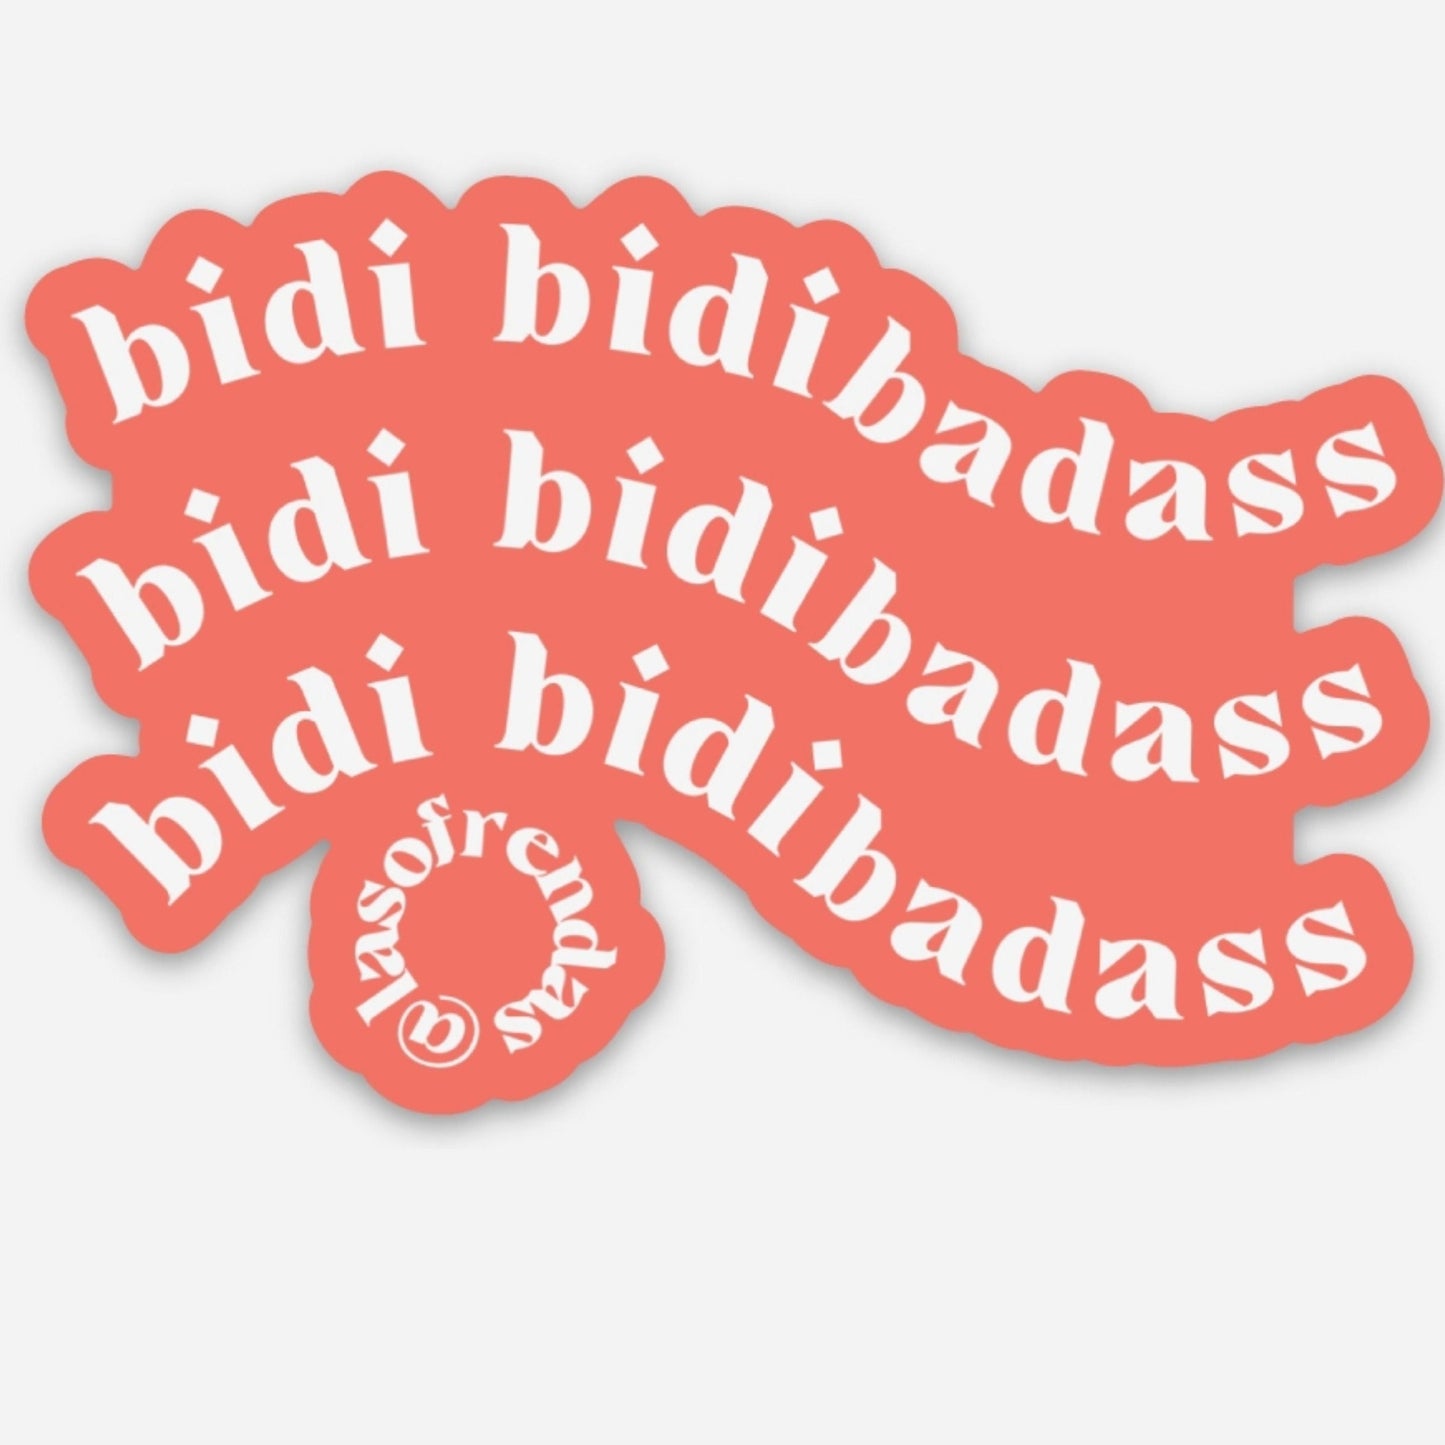 Bidi Bidi Badass  vinyl Inspirational Sticker